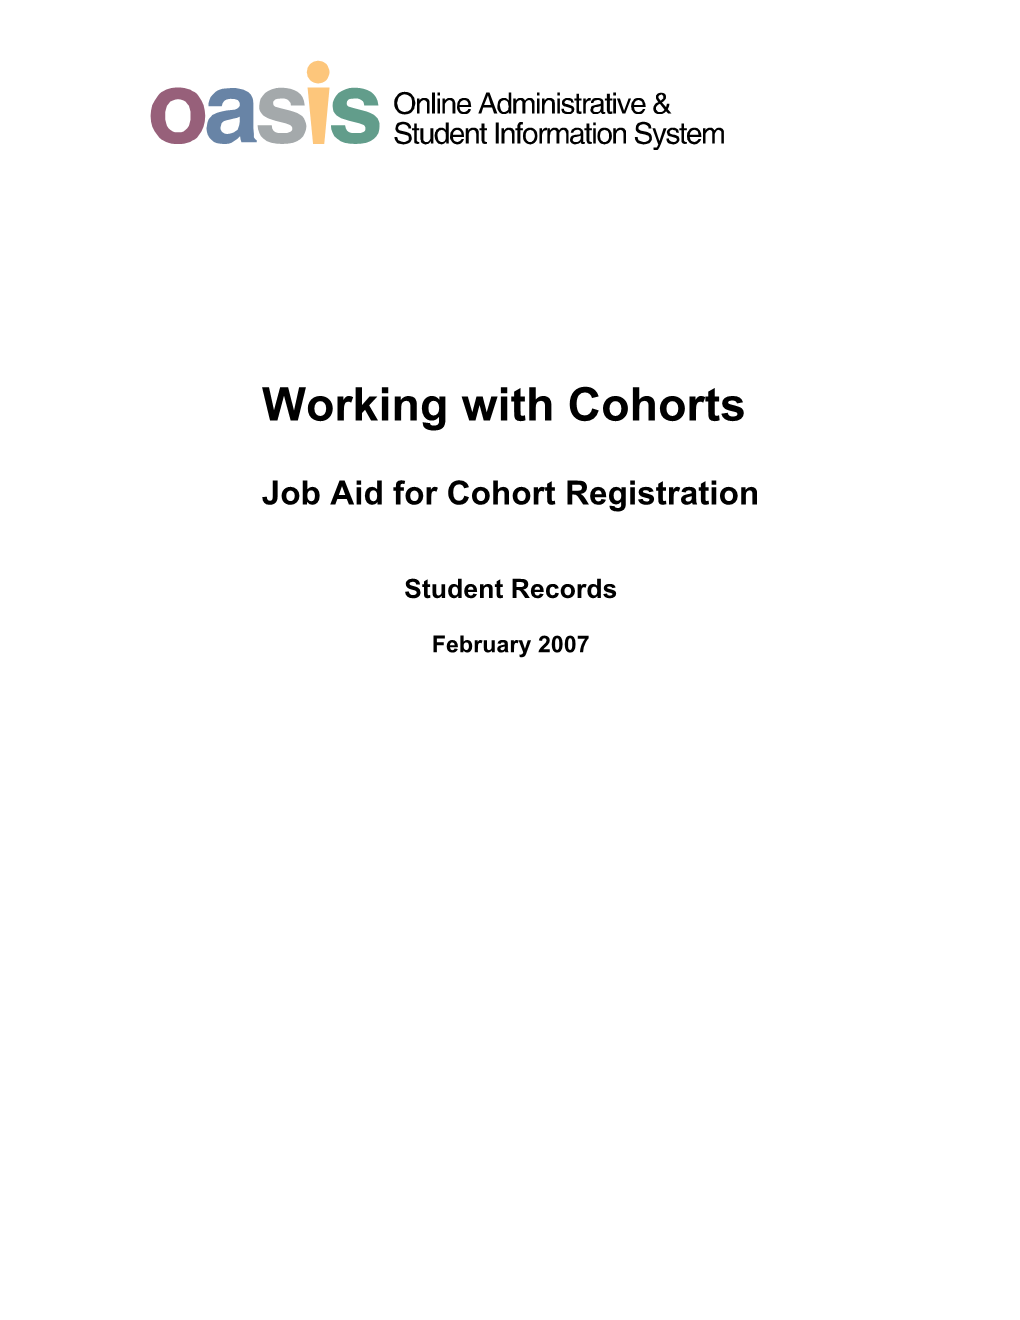 Job Aid for Cohort Registration